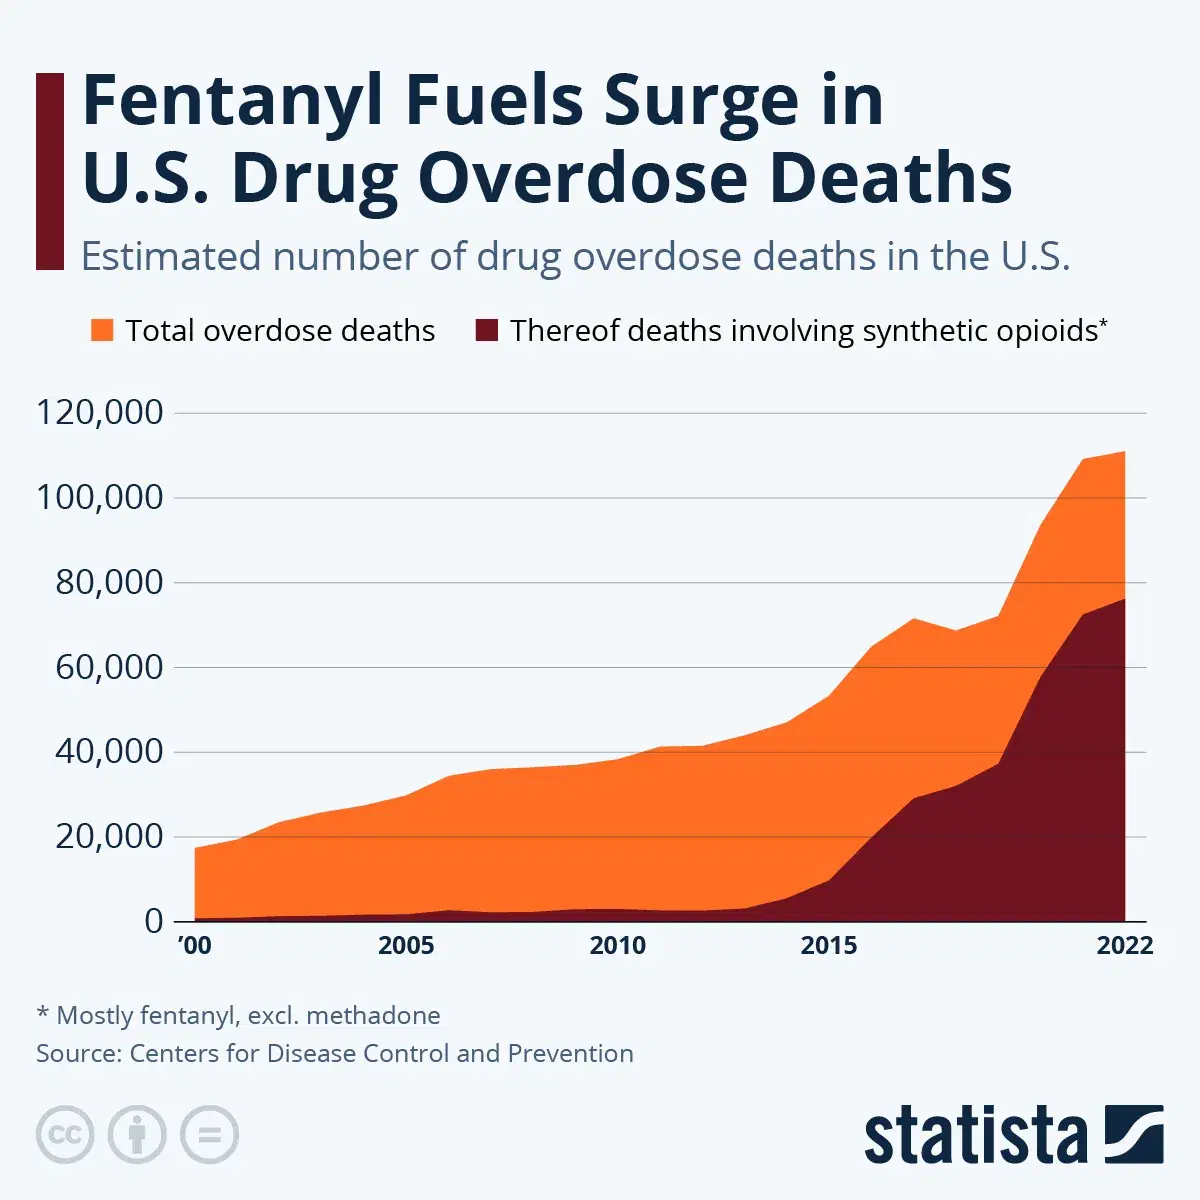 Fentanyl Fuels Surge in U.S. Drug Overdose Deaths